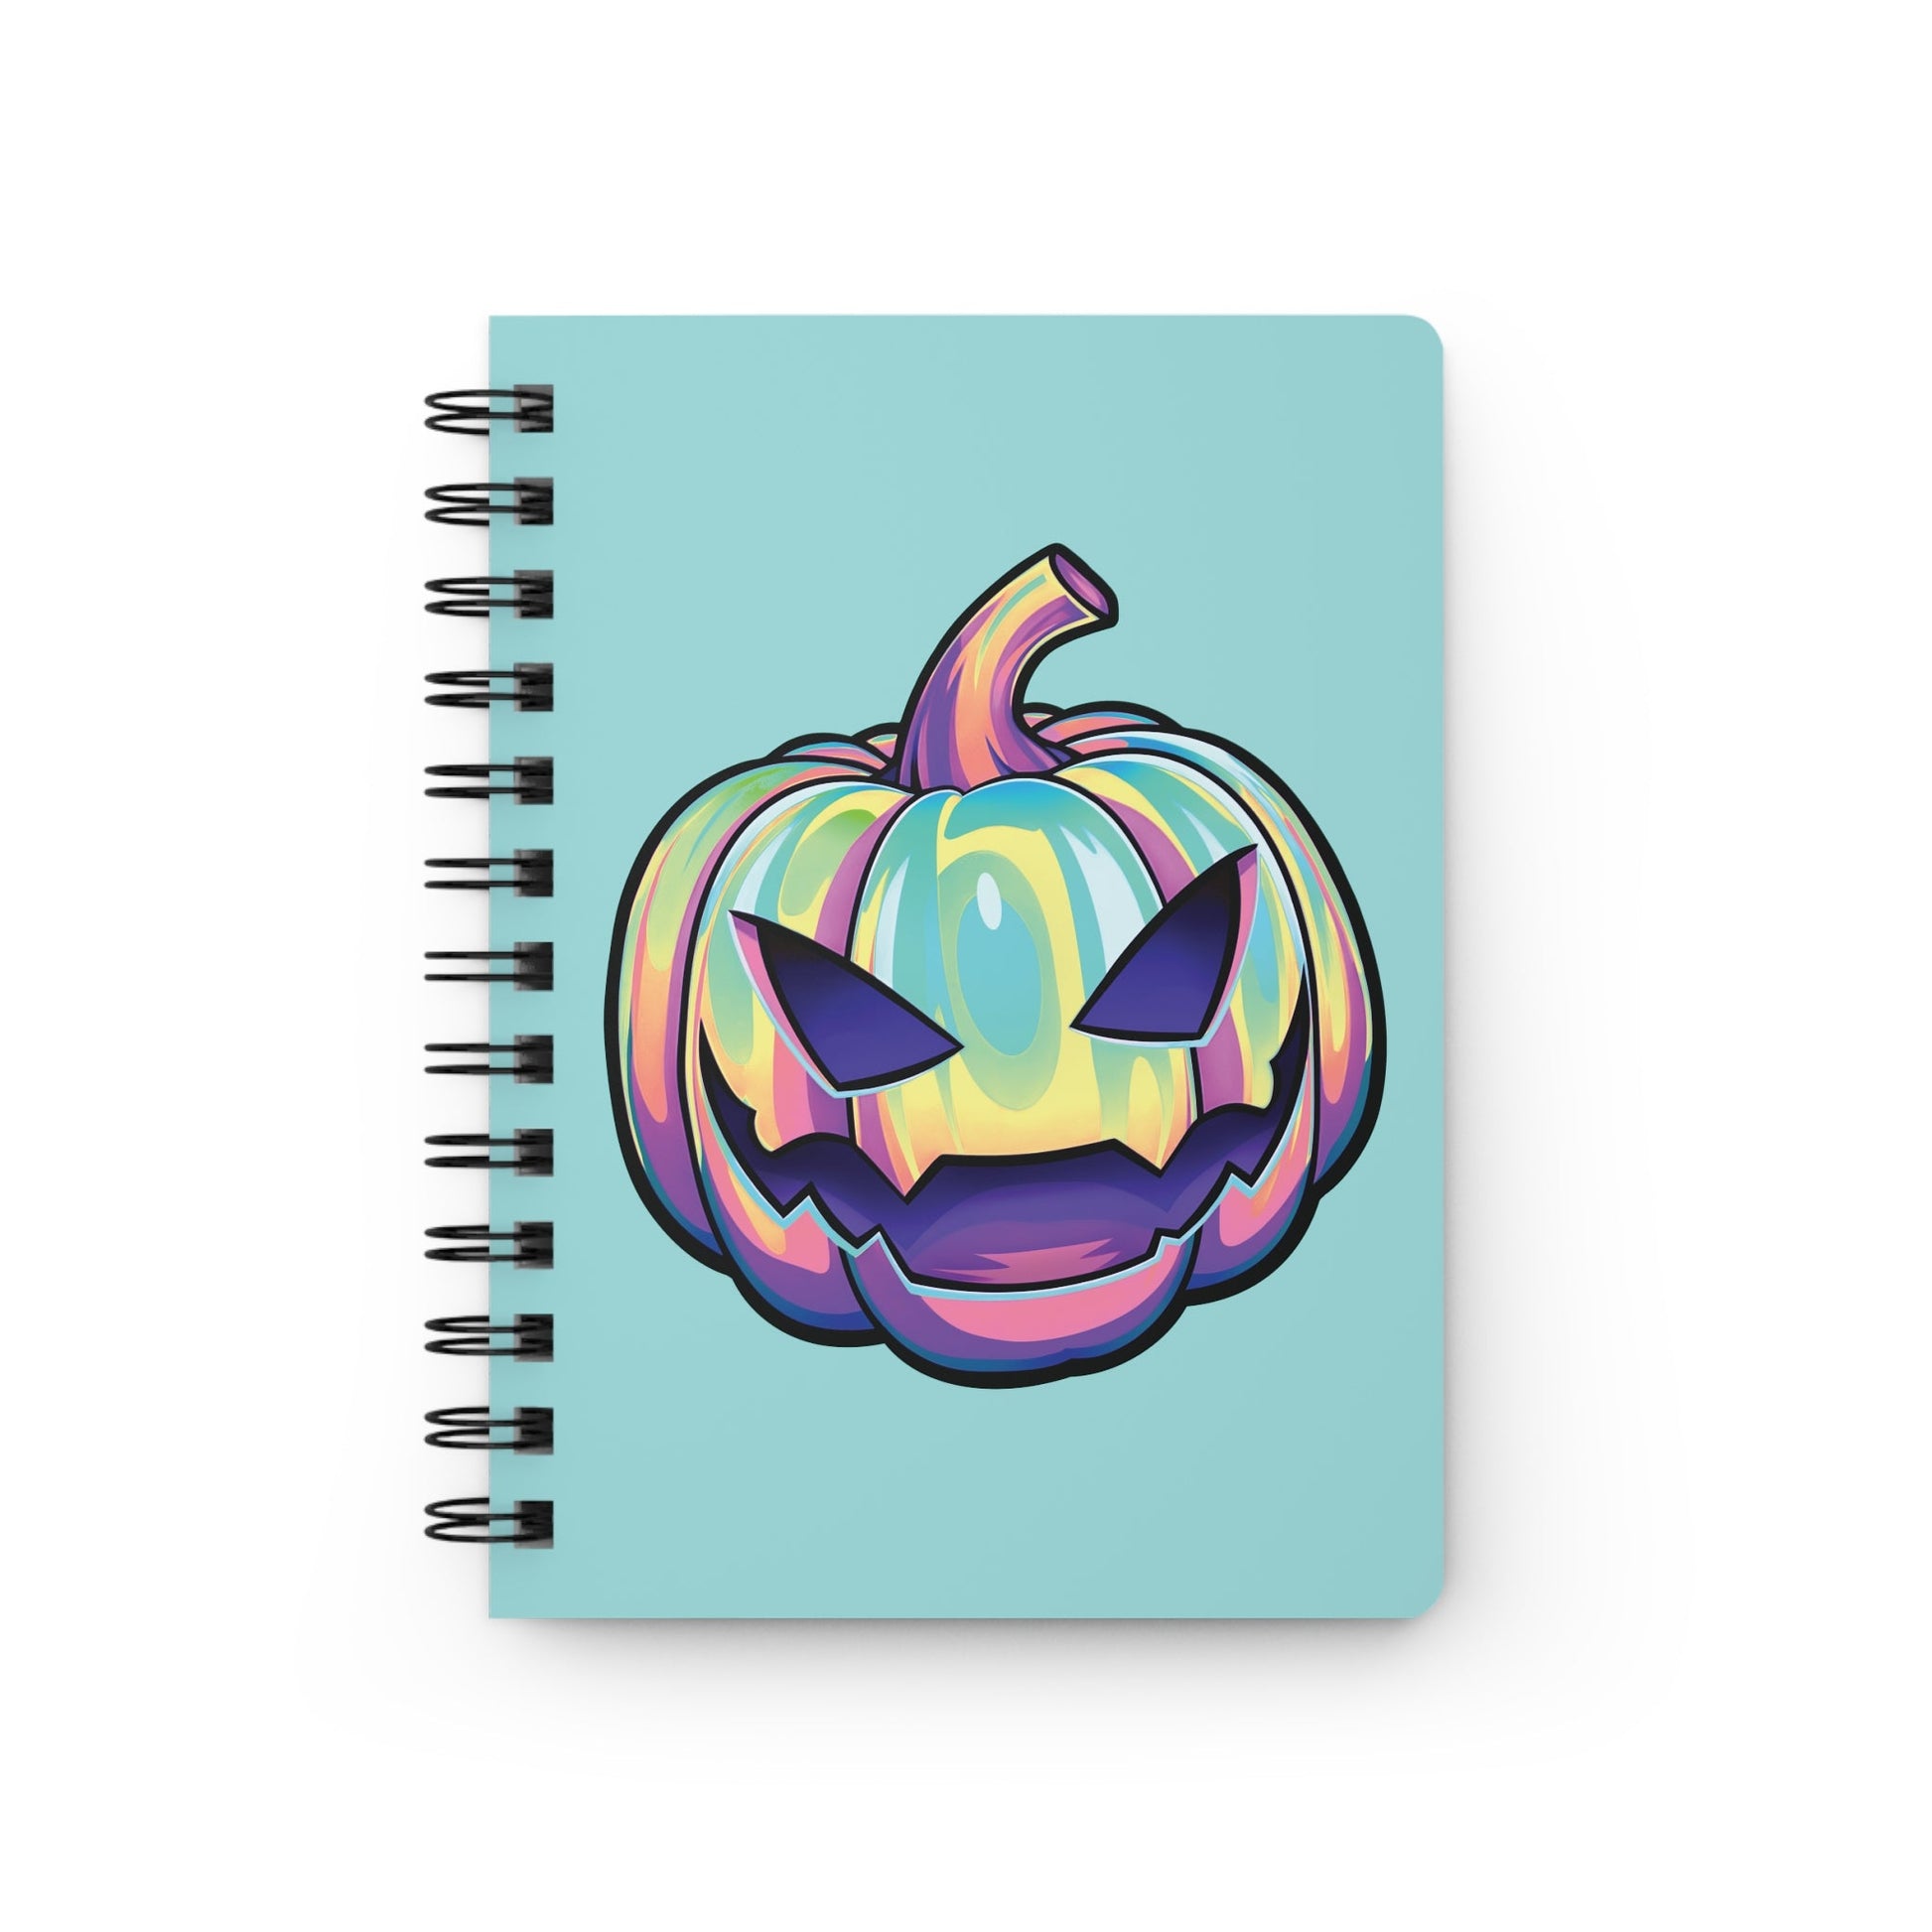 Joke-o'-Lantern Spiral Bound Journal - Aqua - Driftless Enchantments